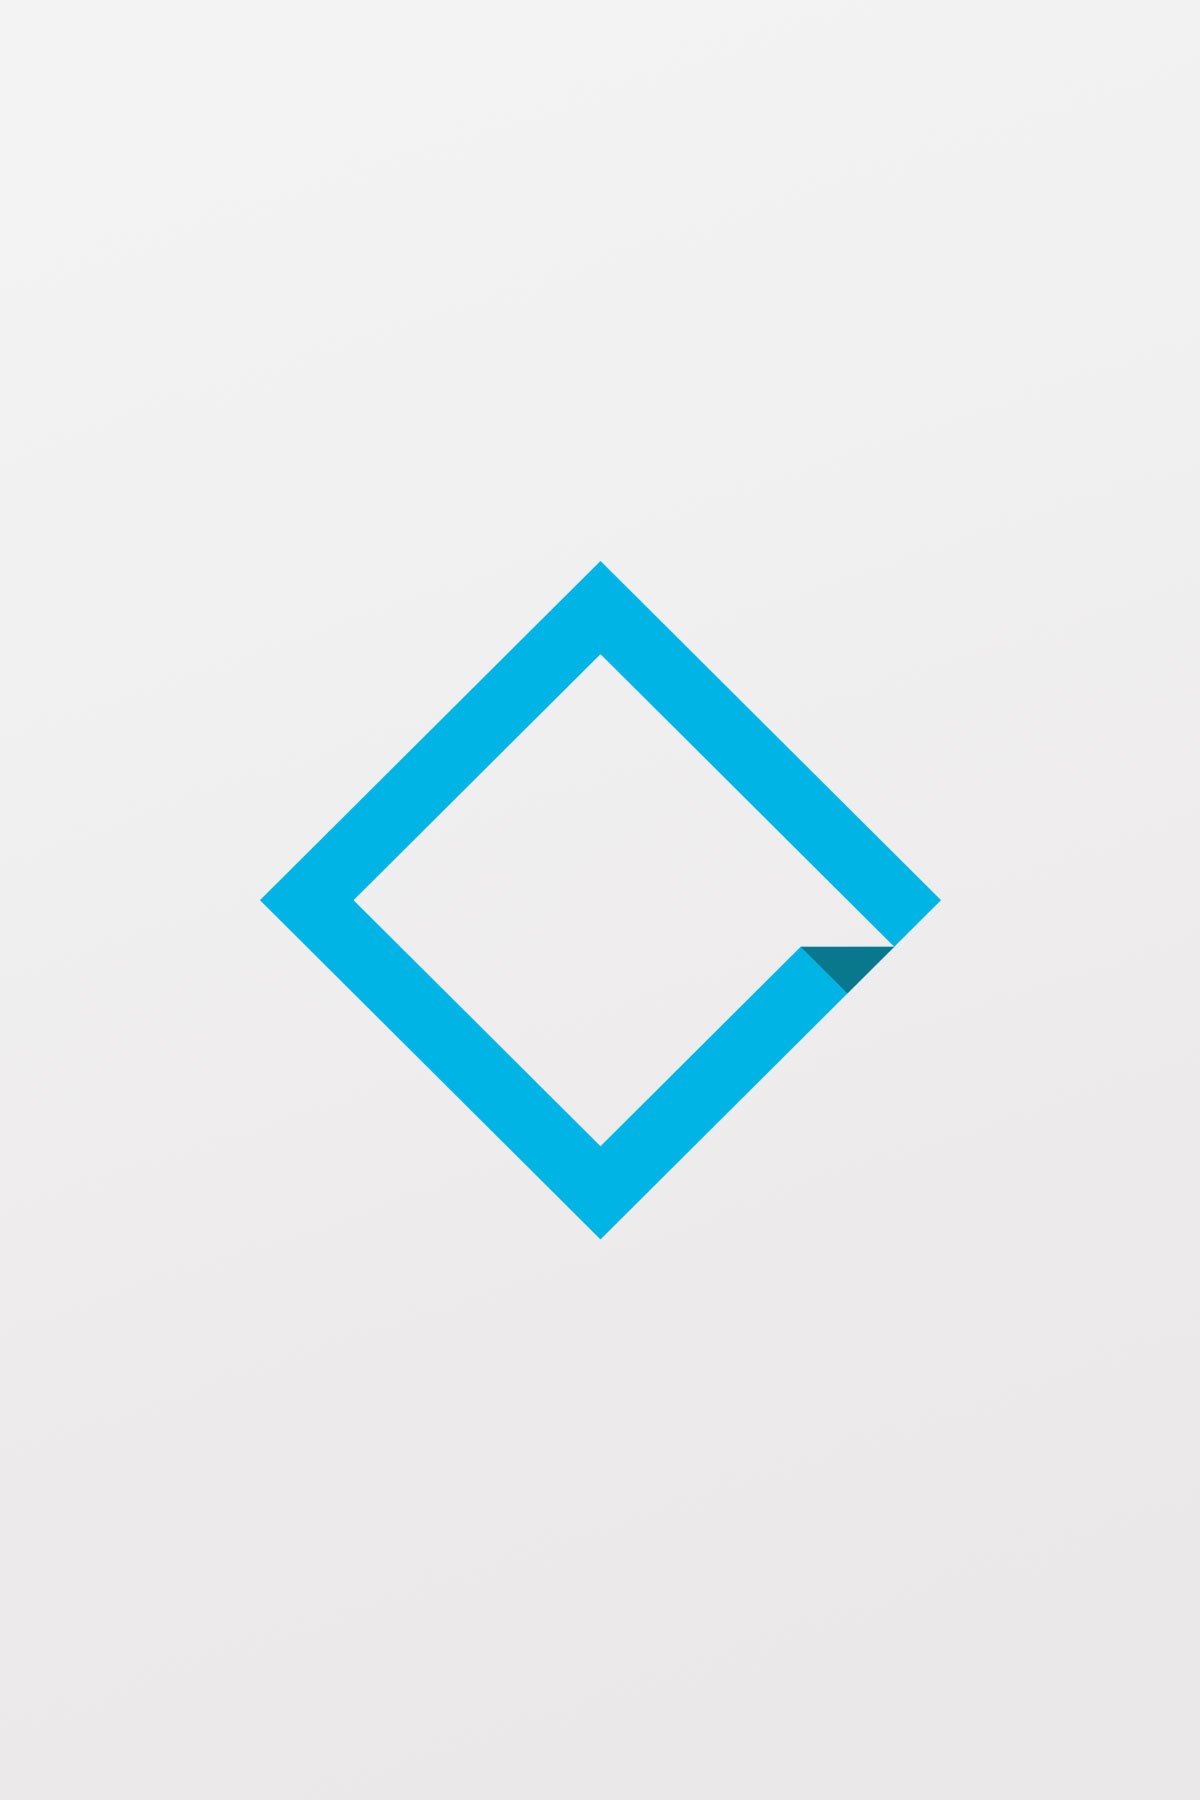 dux studio (iPad Pro 12.9" 4th Gen / 12.9" 3rd Gen) - midnight blue